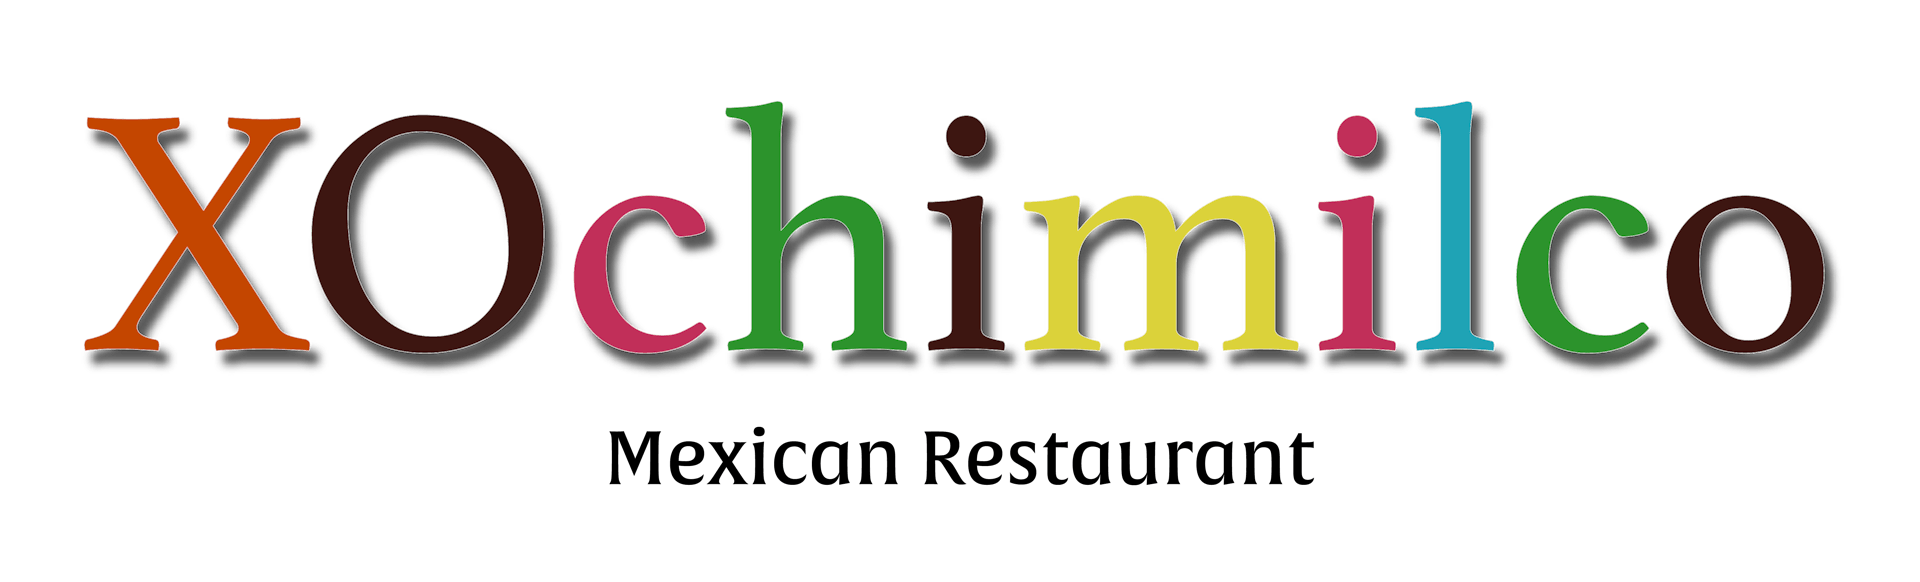 Mexico Clasico Dinner Menu